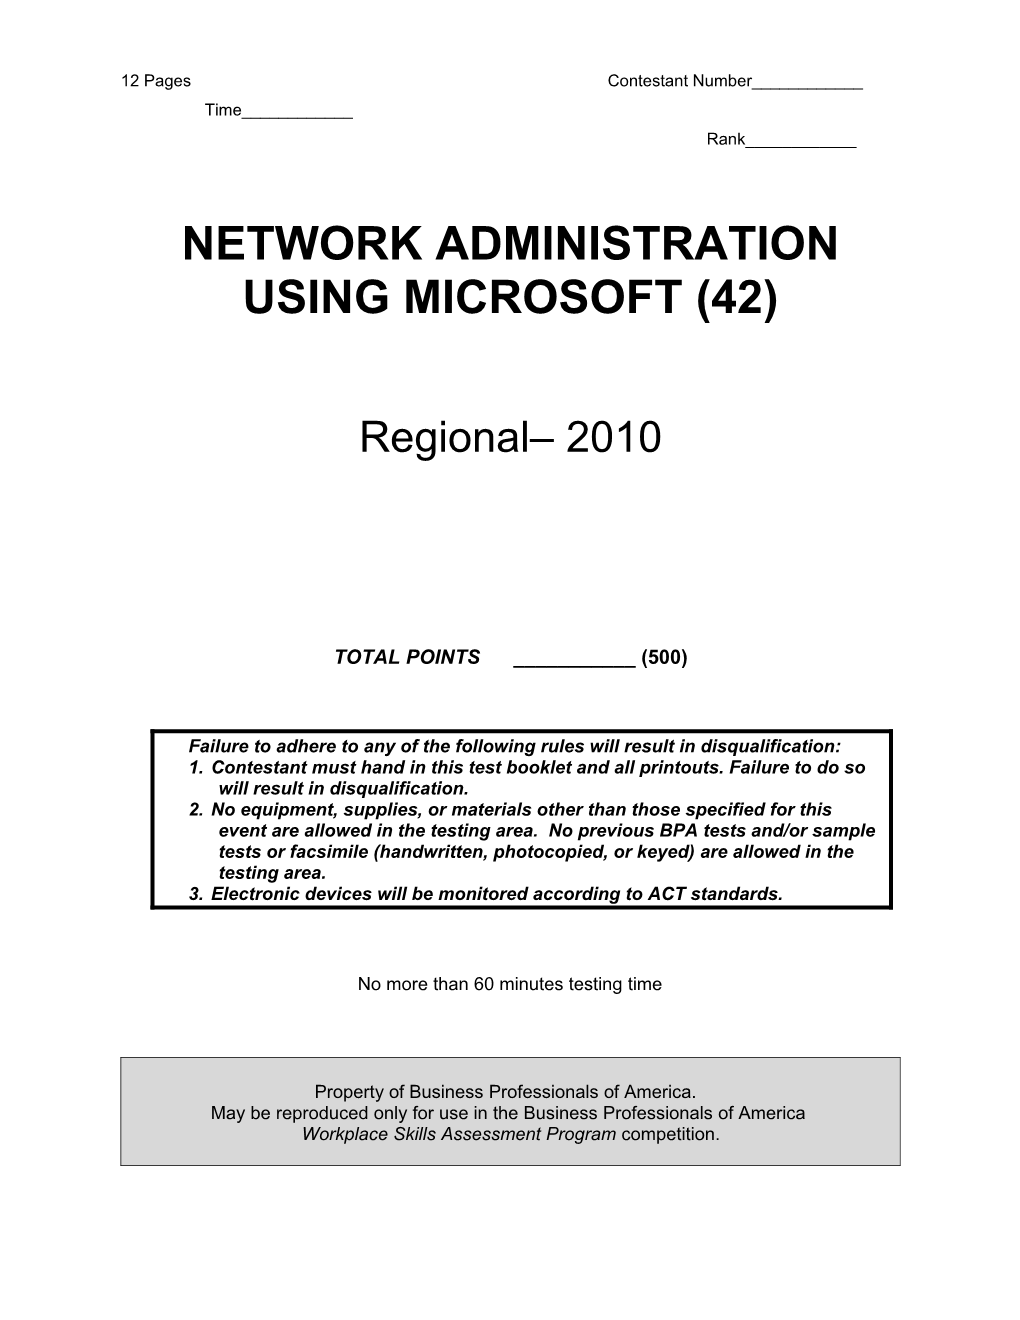 Microsoft Network Administration (46)